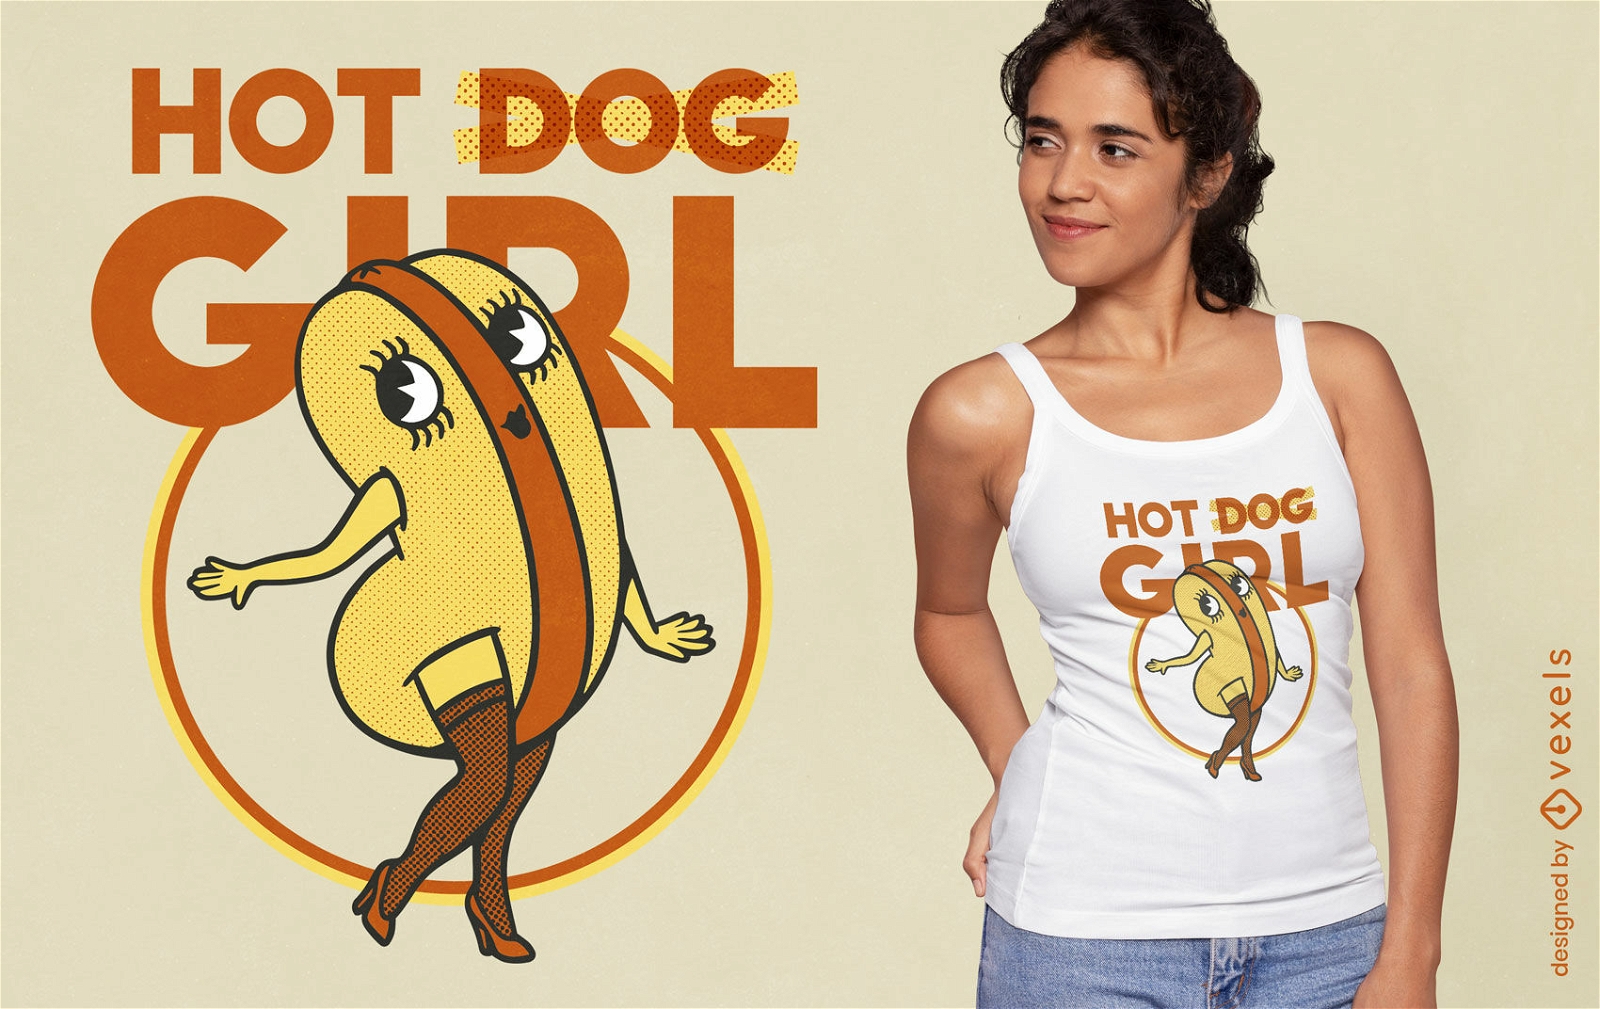 Hot dog girl legs t-shirt design